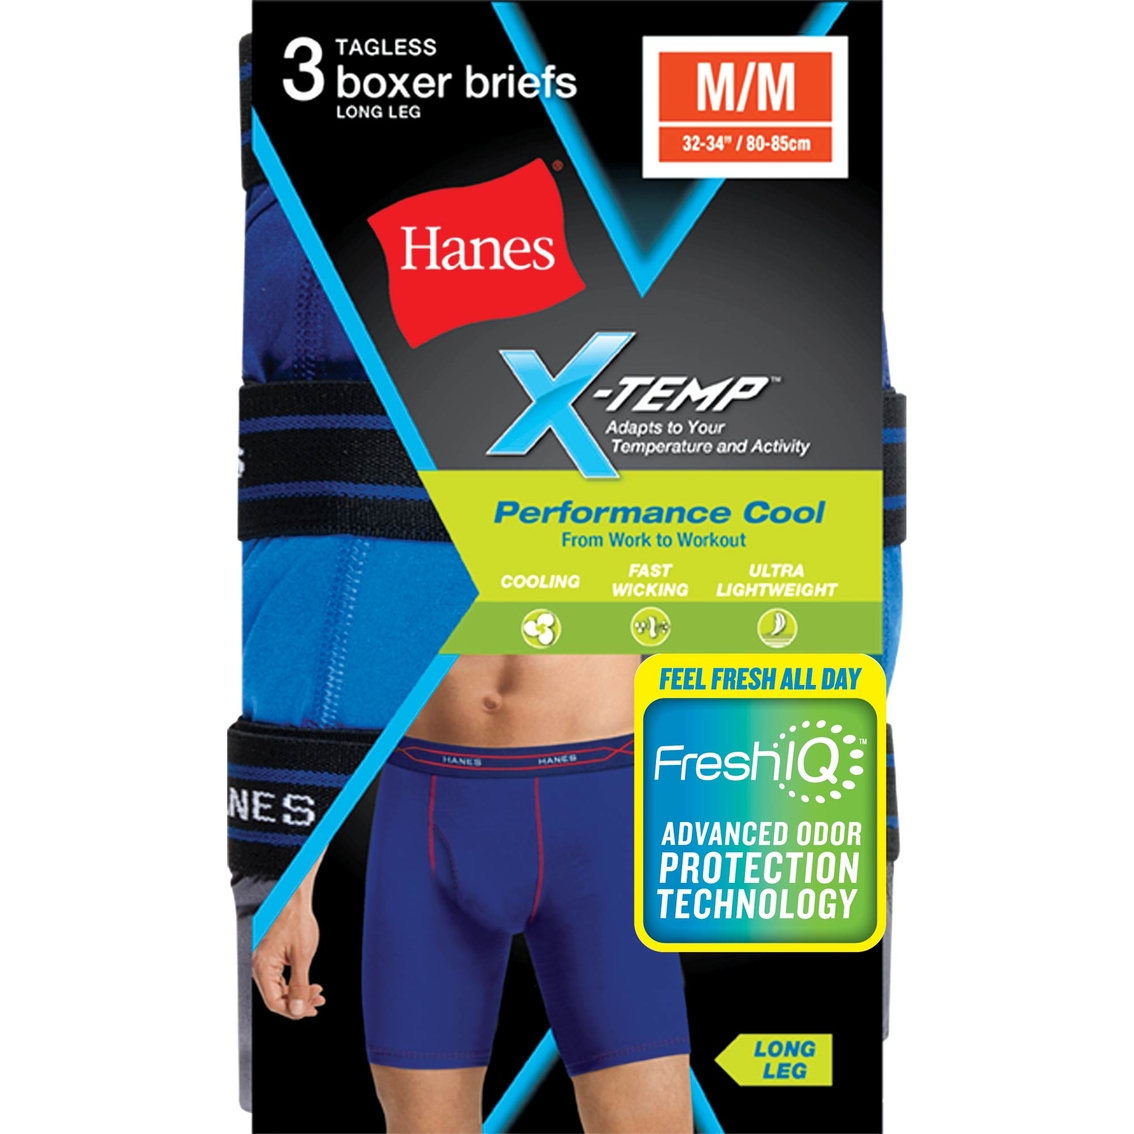 Hanes Performance Cool X-temp Longer Leg Boxer Briefs 3 Pk